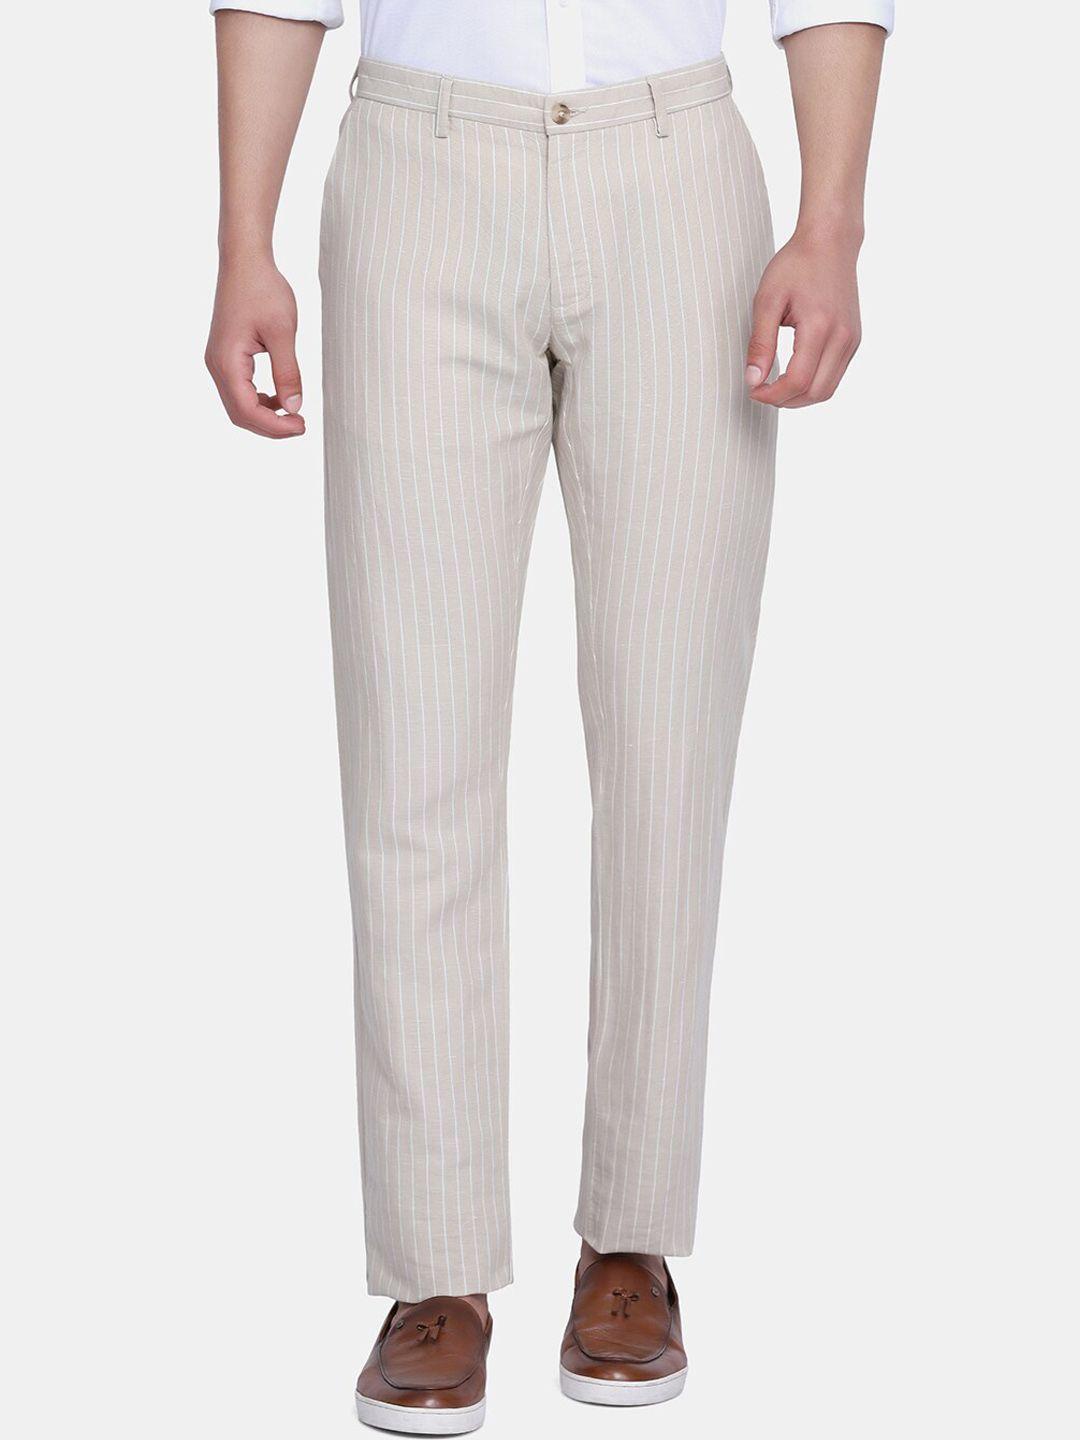 blackberrys-men-cream-coloured-striped-slim-fit-trousers